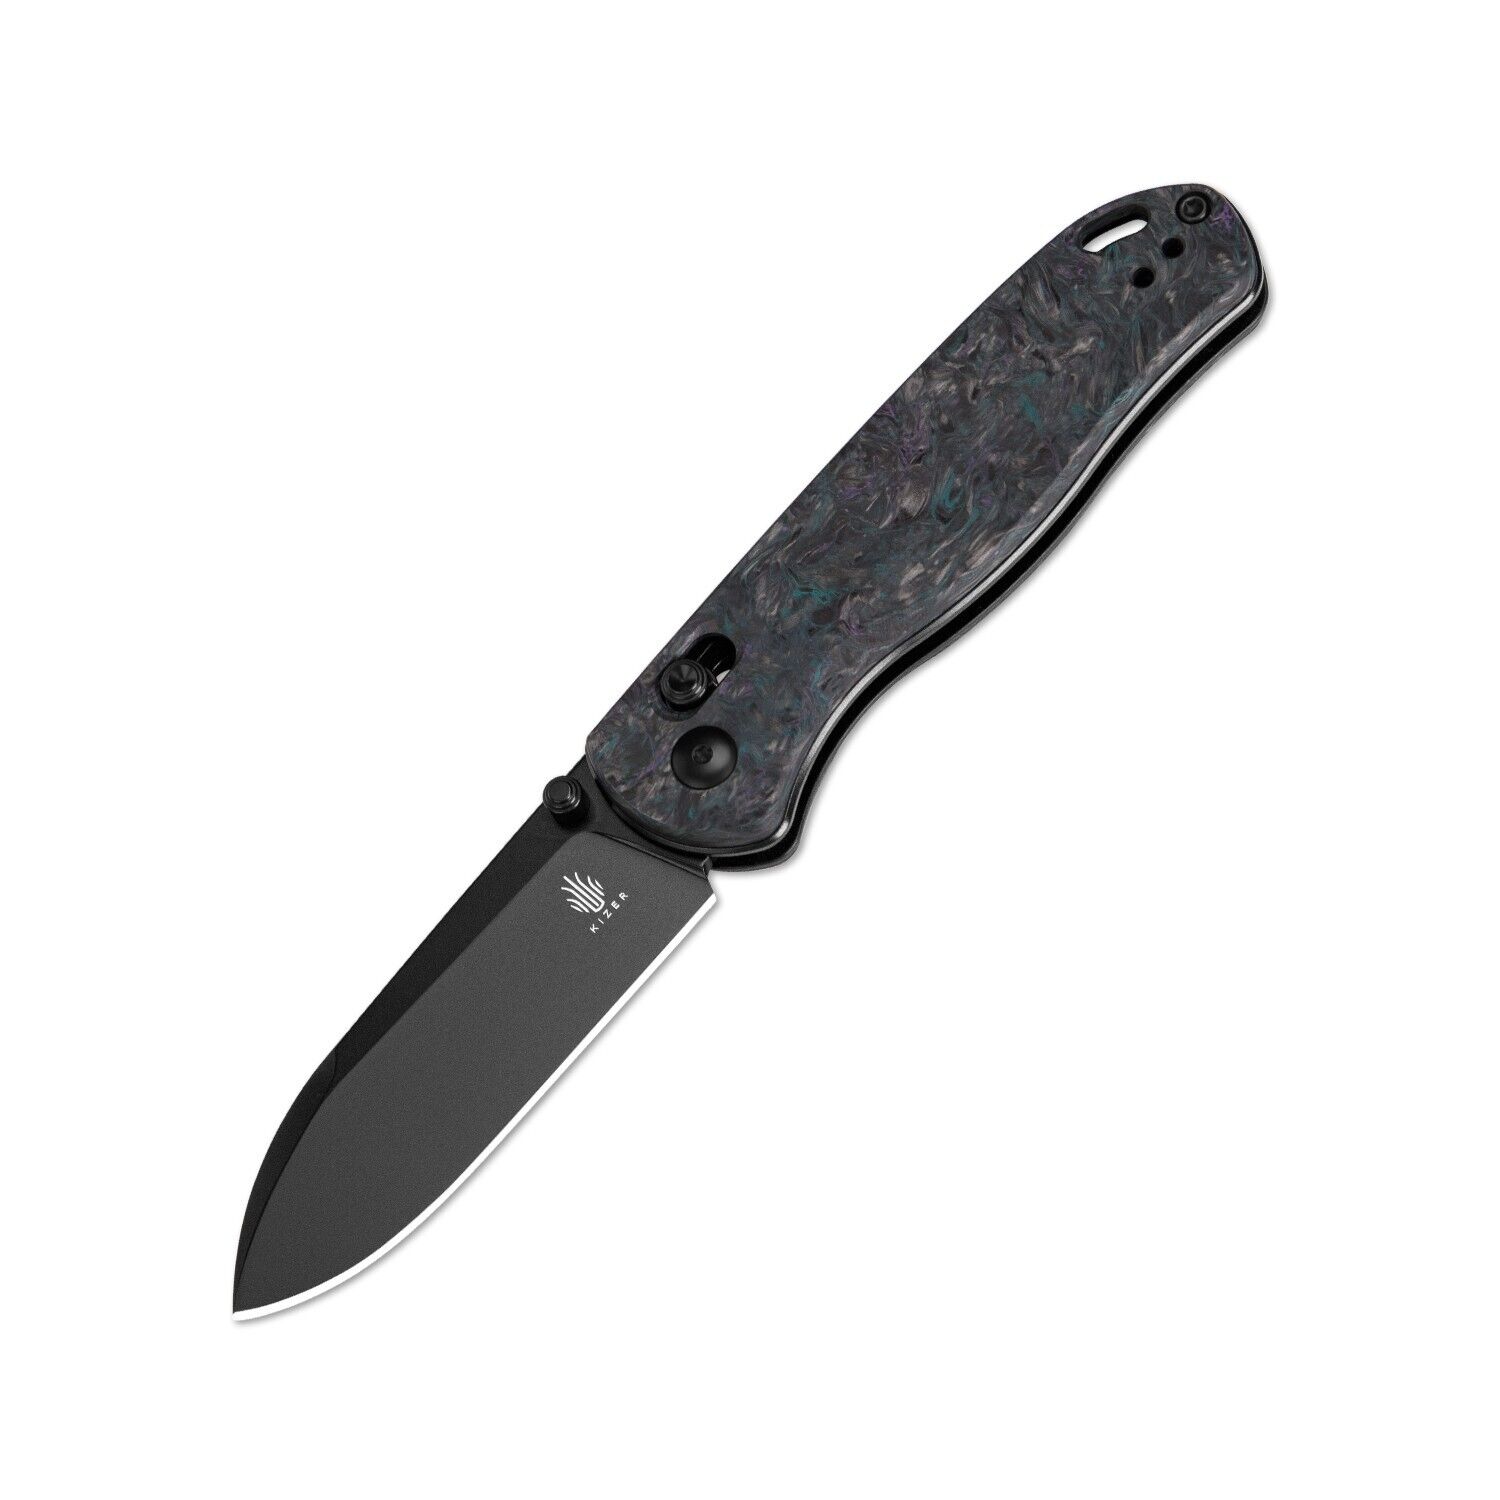 Kizer Drop Bear Pocket Knife, S35VN Steel Blade, Fatcarbon Handle, Ki3619A4